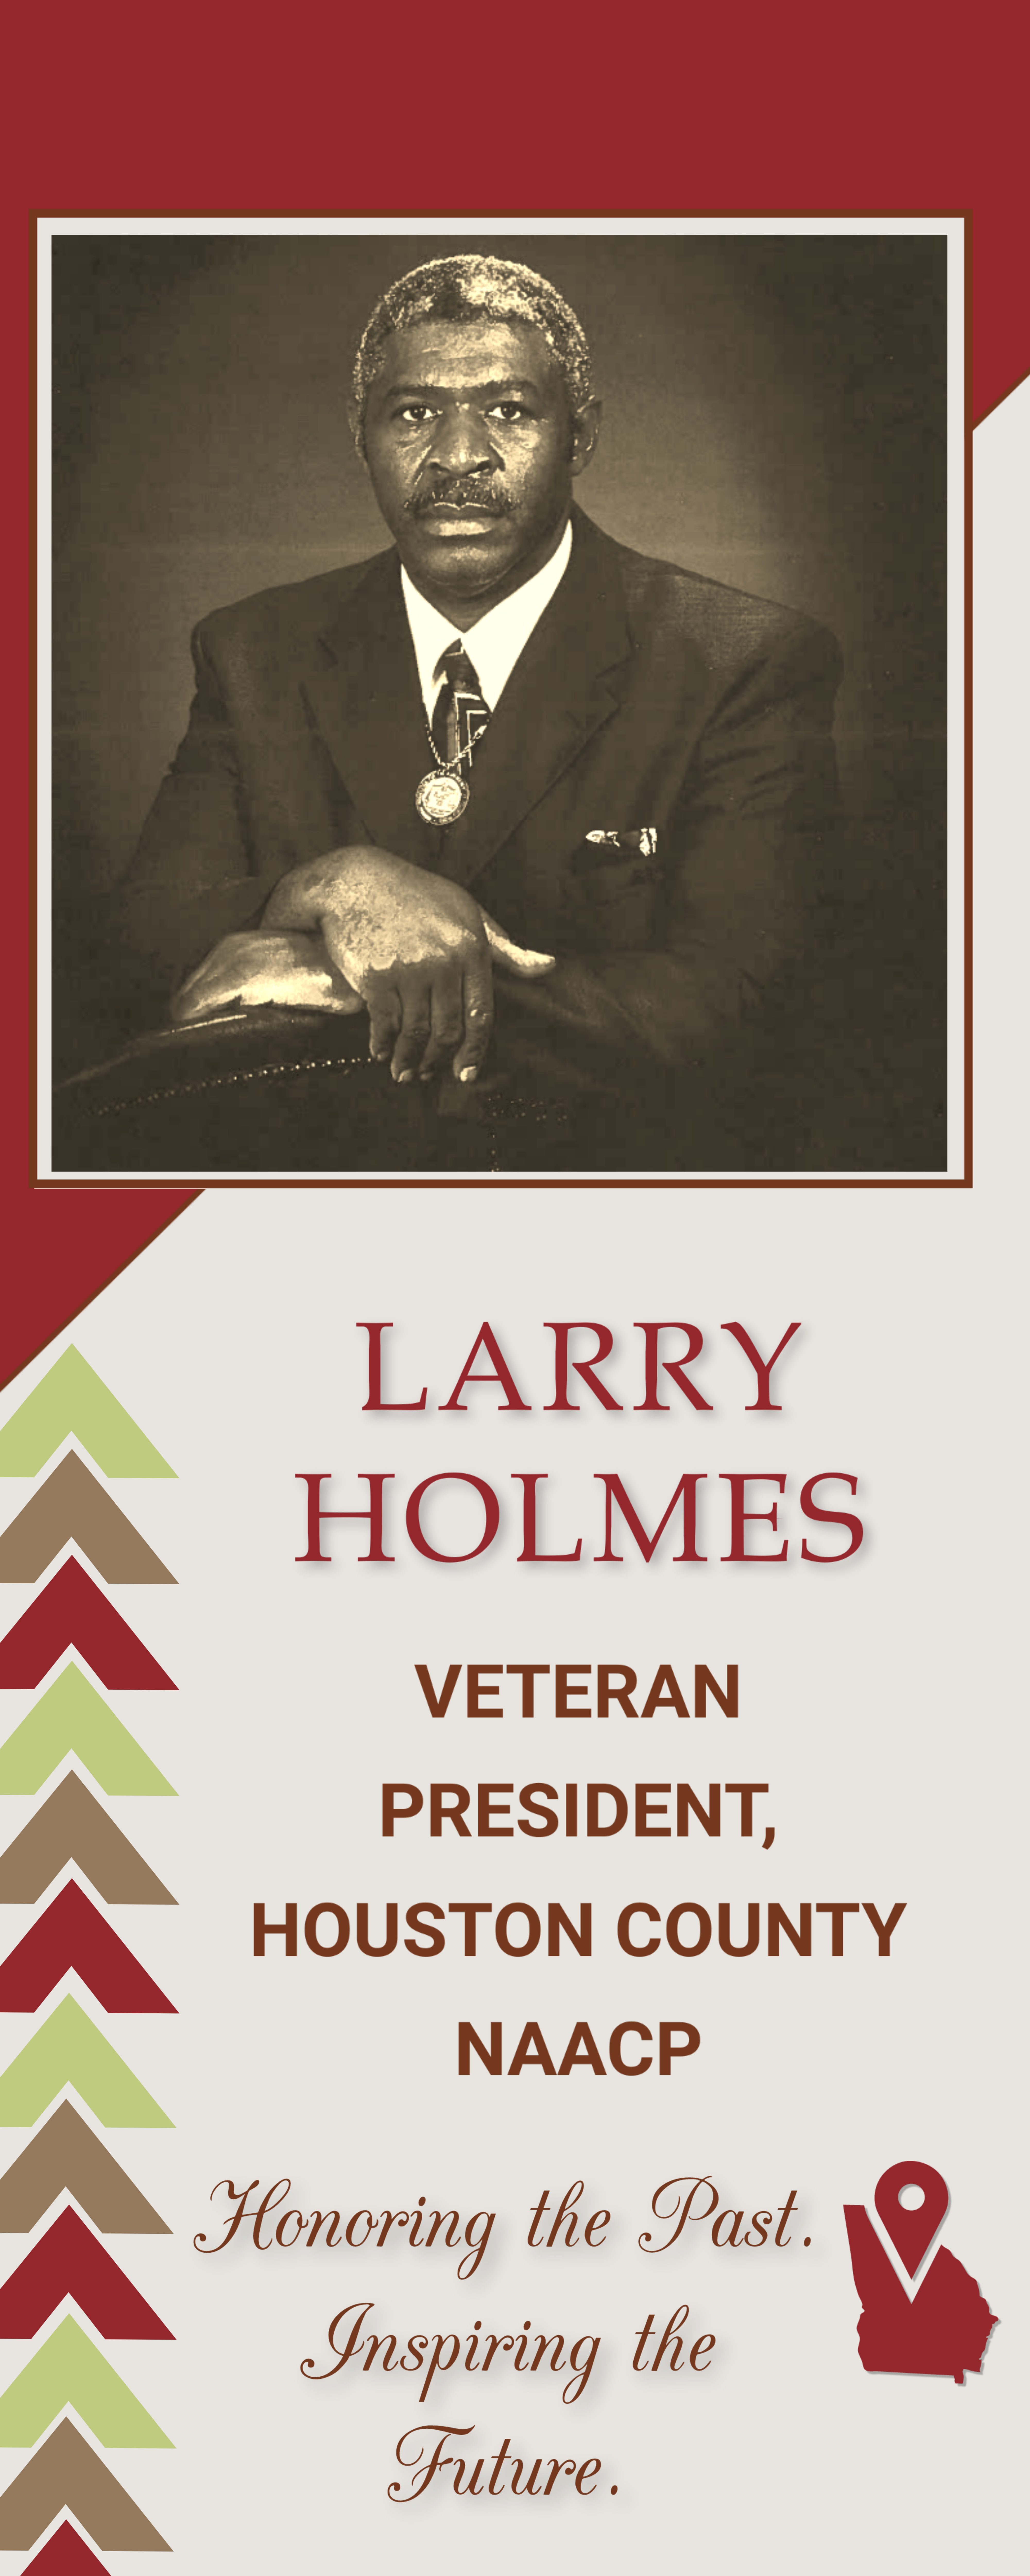 Larry Holmes